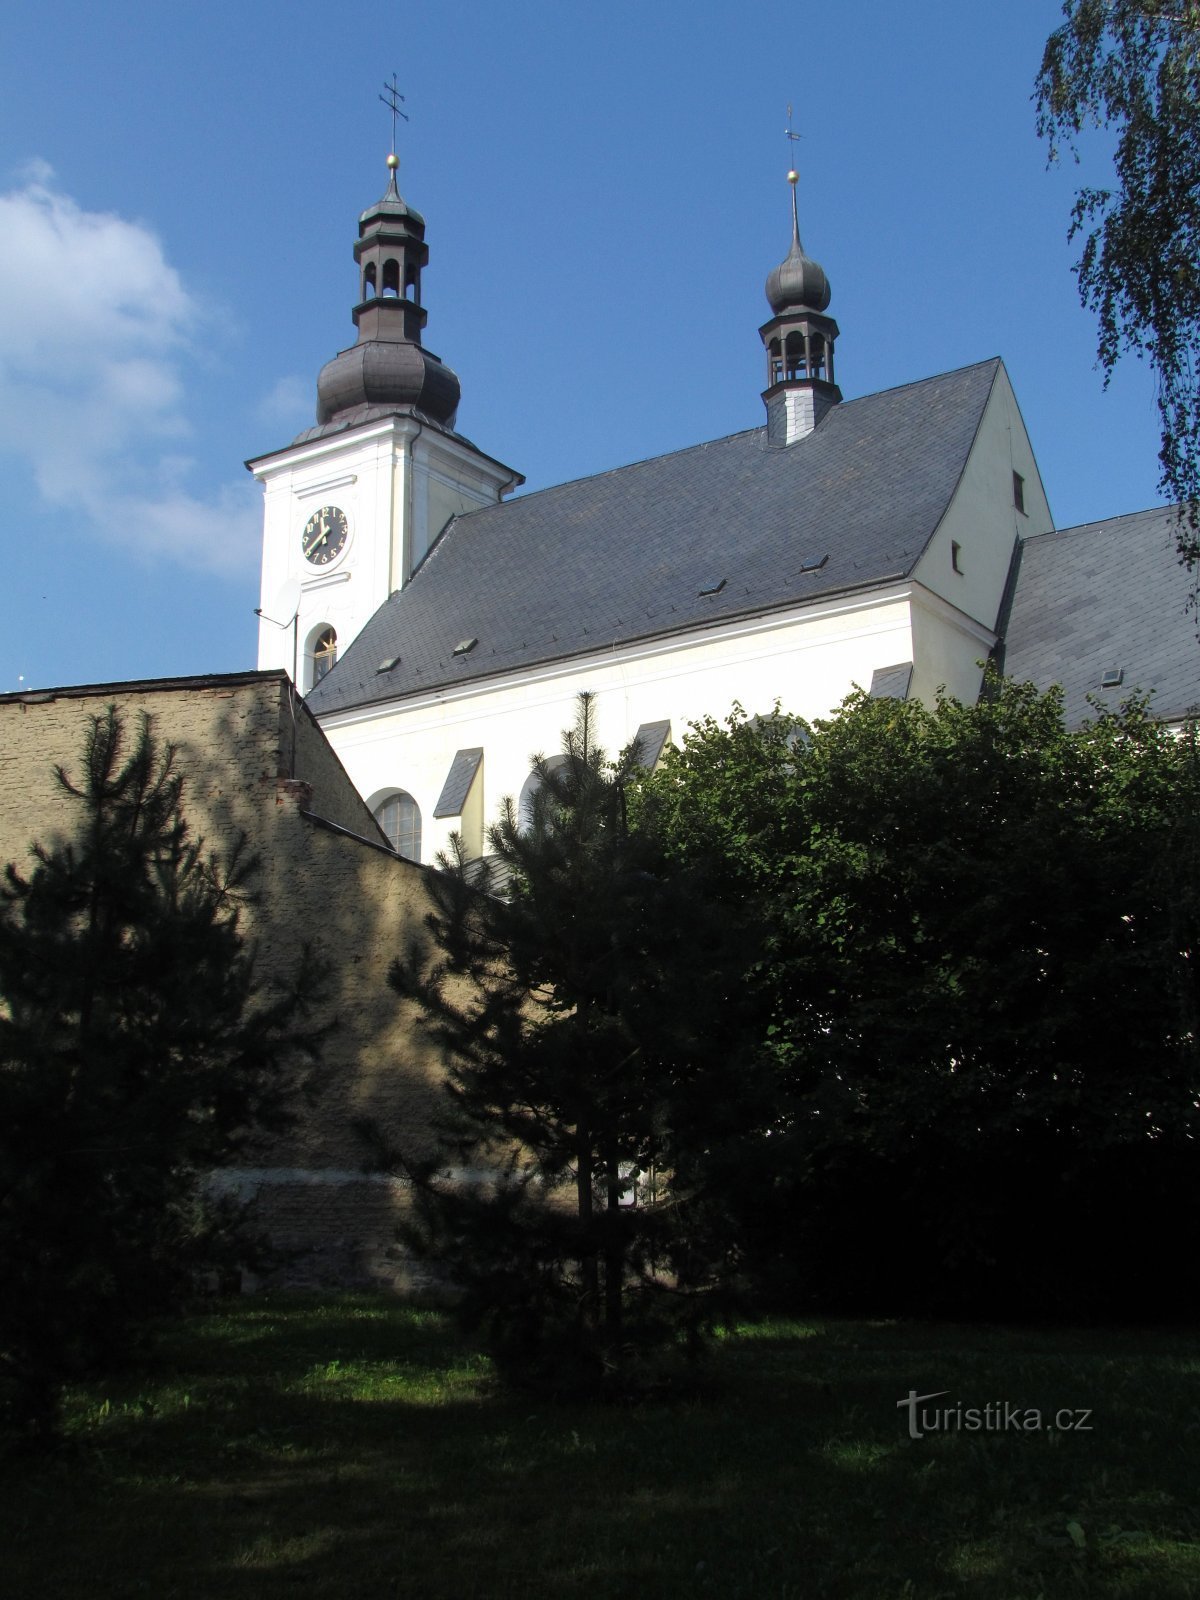 Odry - church of St. Bartholomew